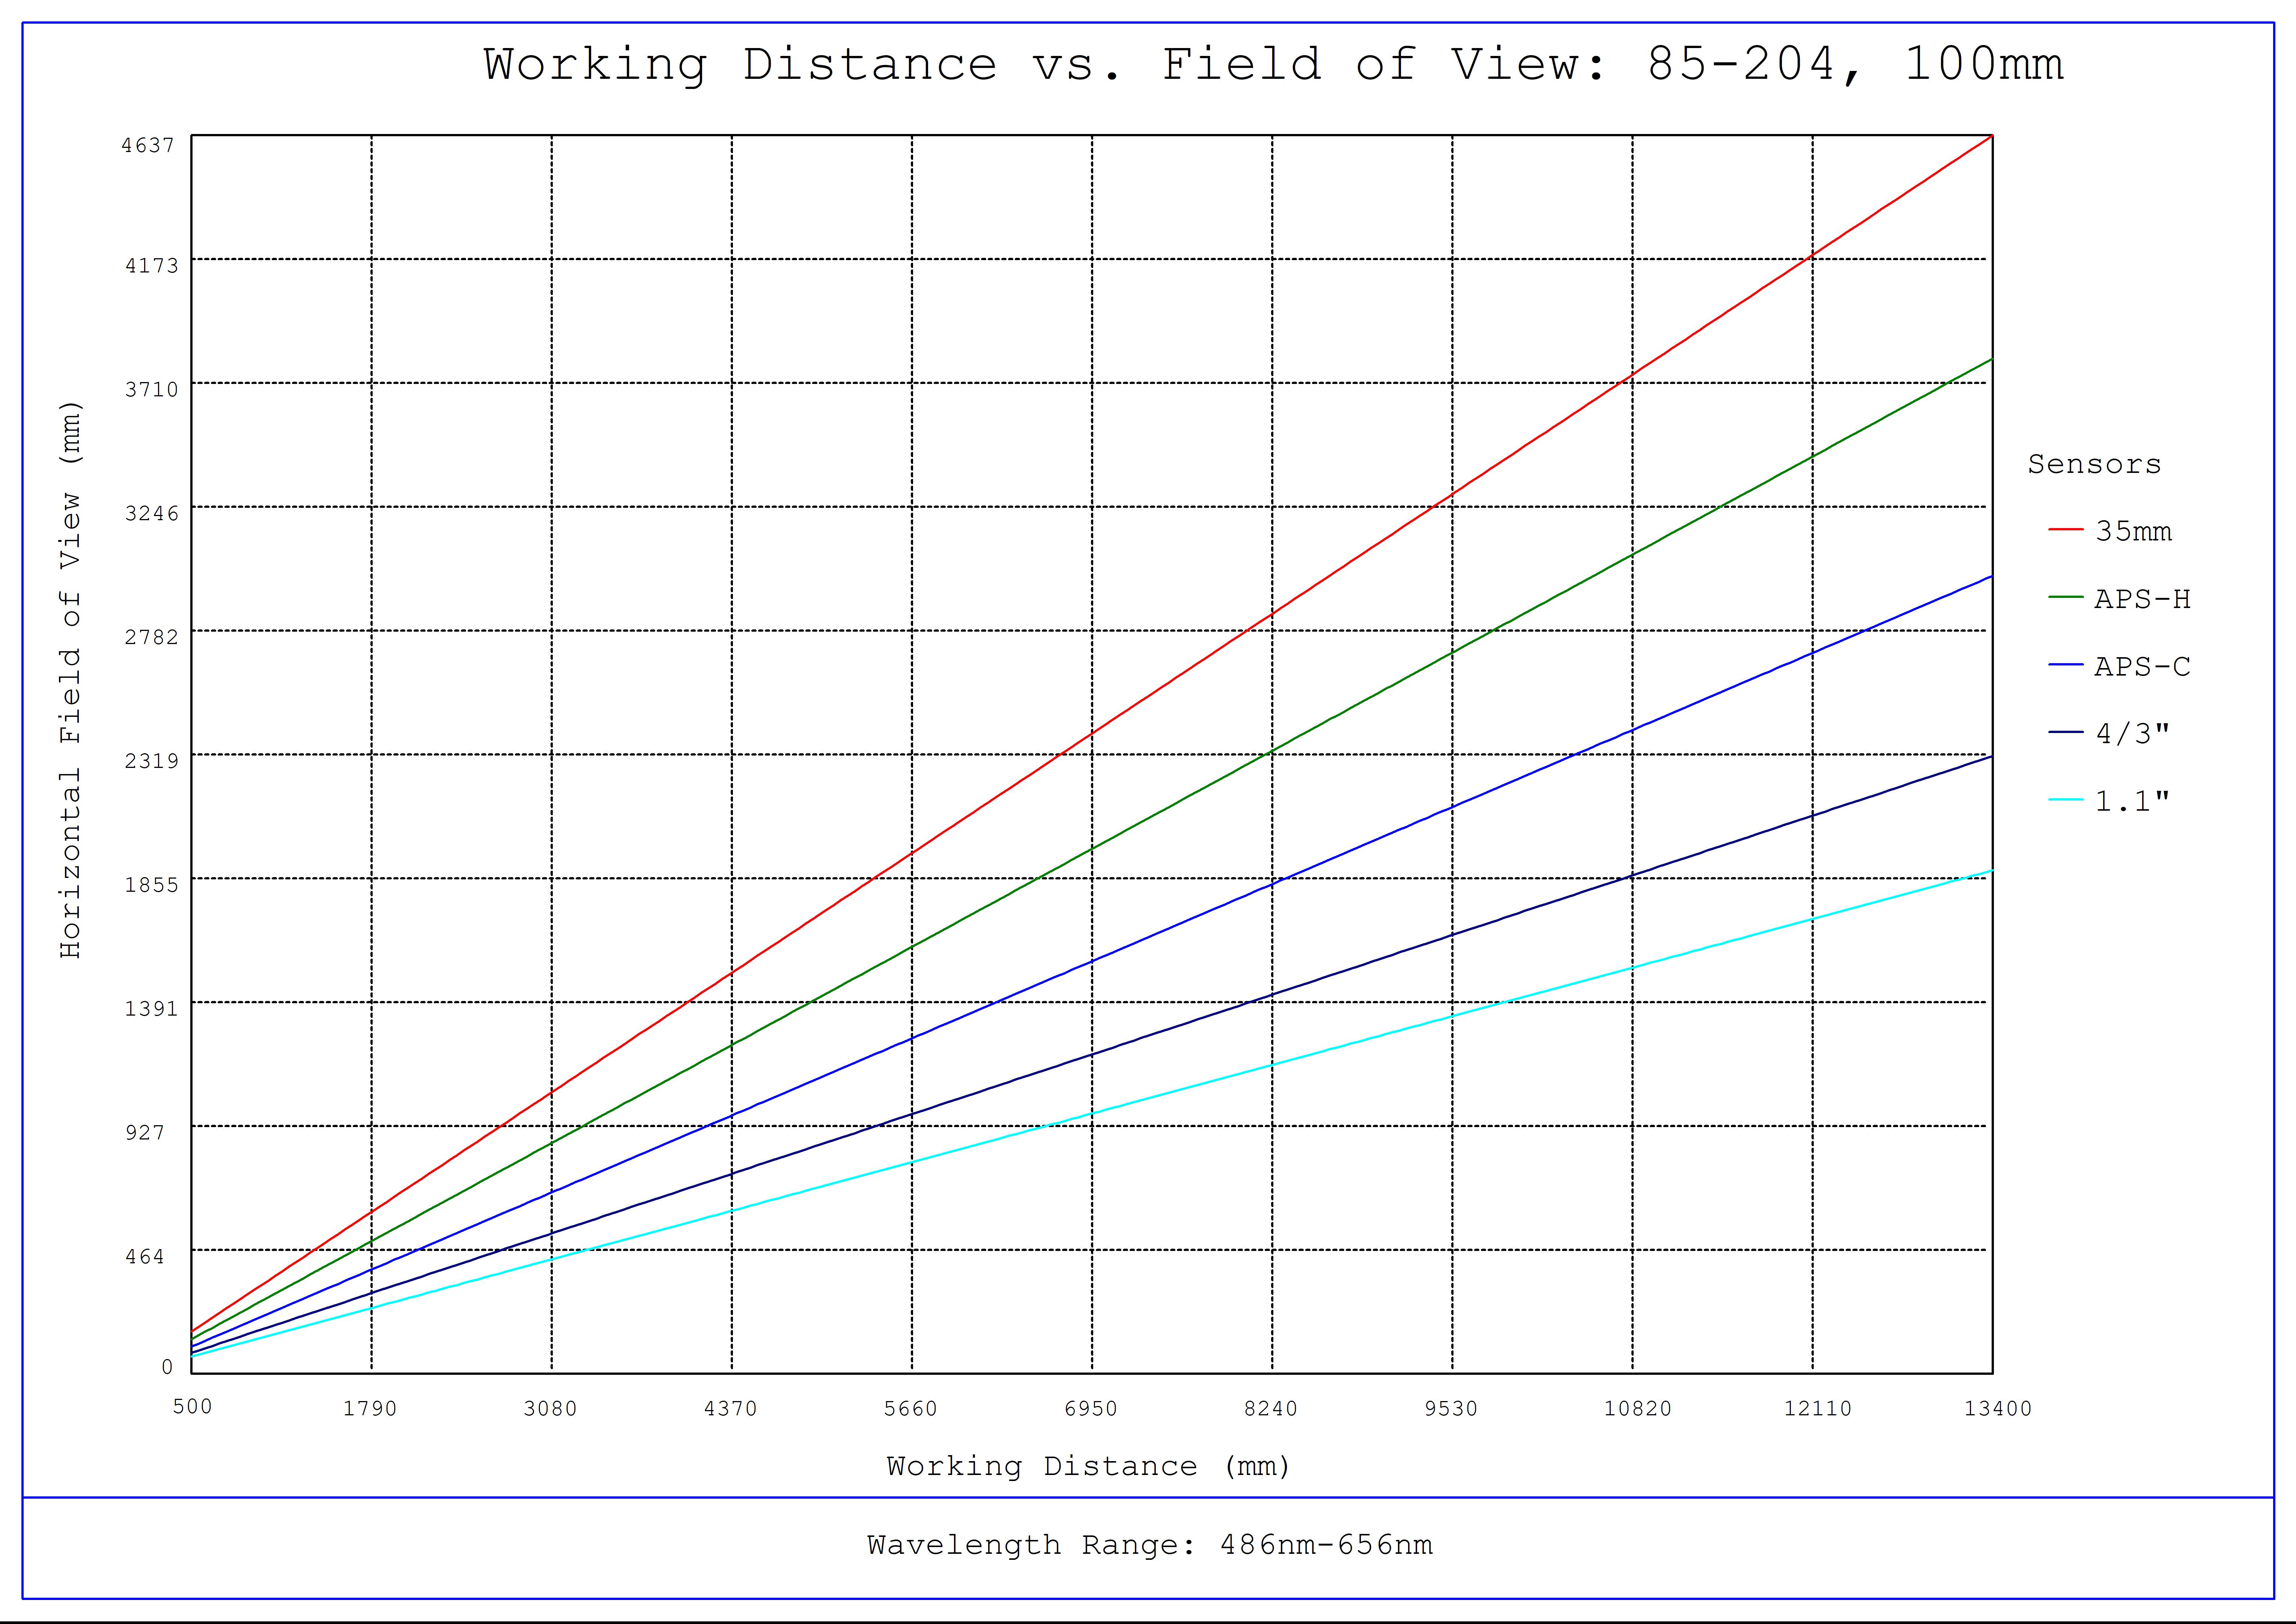 #85-204, 100mm Focal Length, LF Series Fixed Focal Length Lens, Working Distance versus Field of View Plot